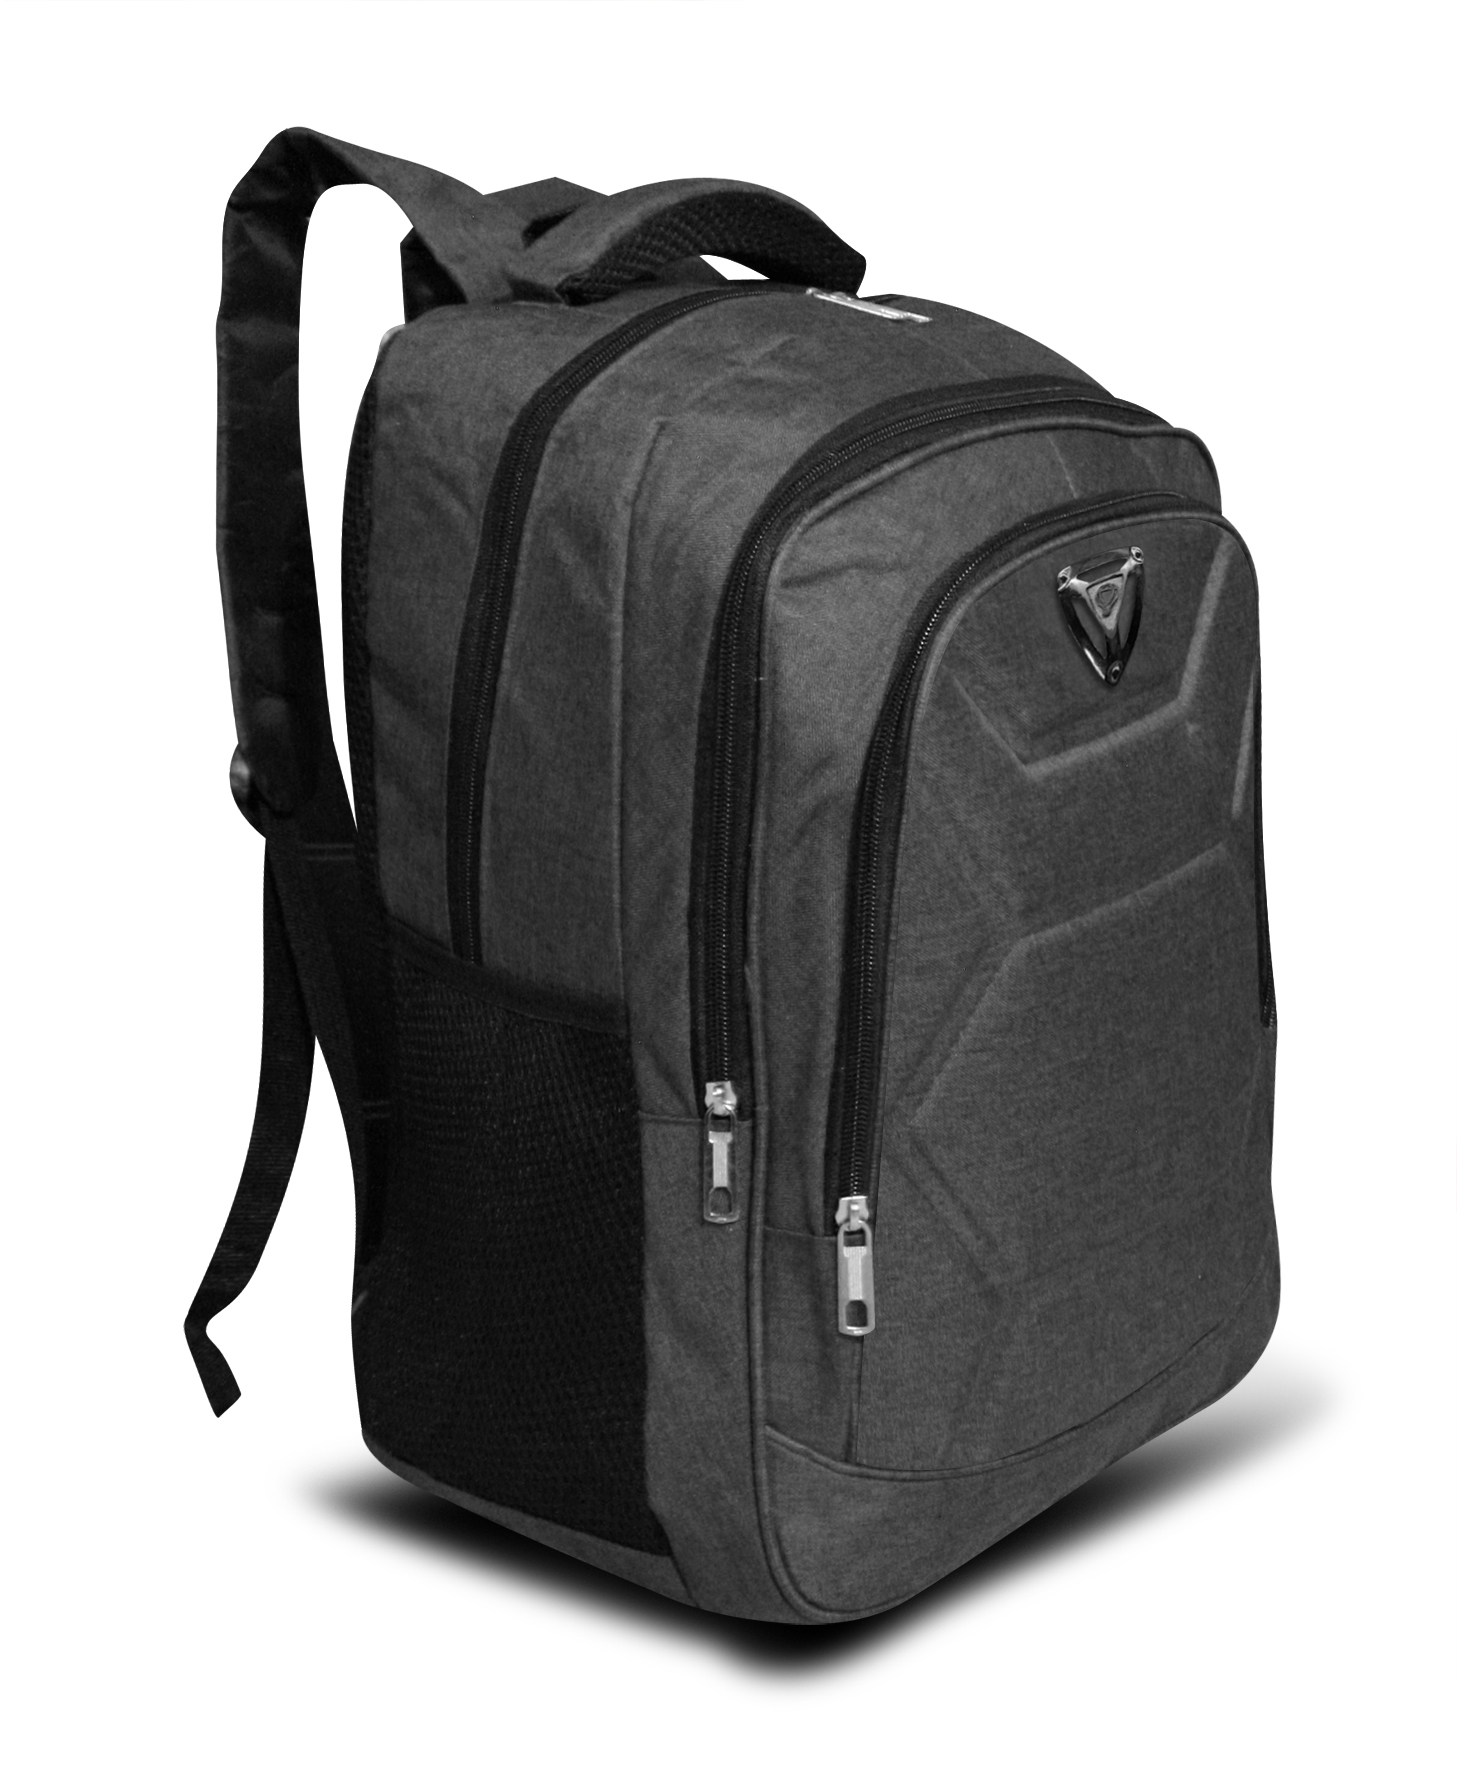 Mochila Backpack Para Laptop Mc.carthy Mod. Mc-022/7 GRIS